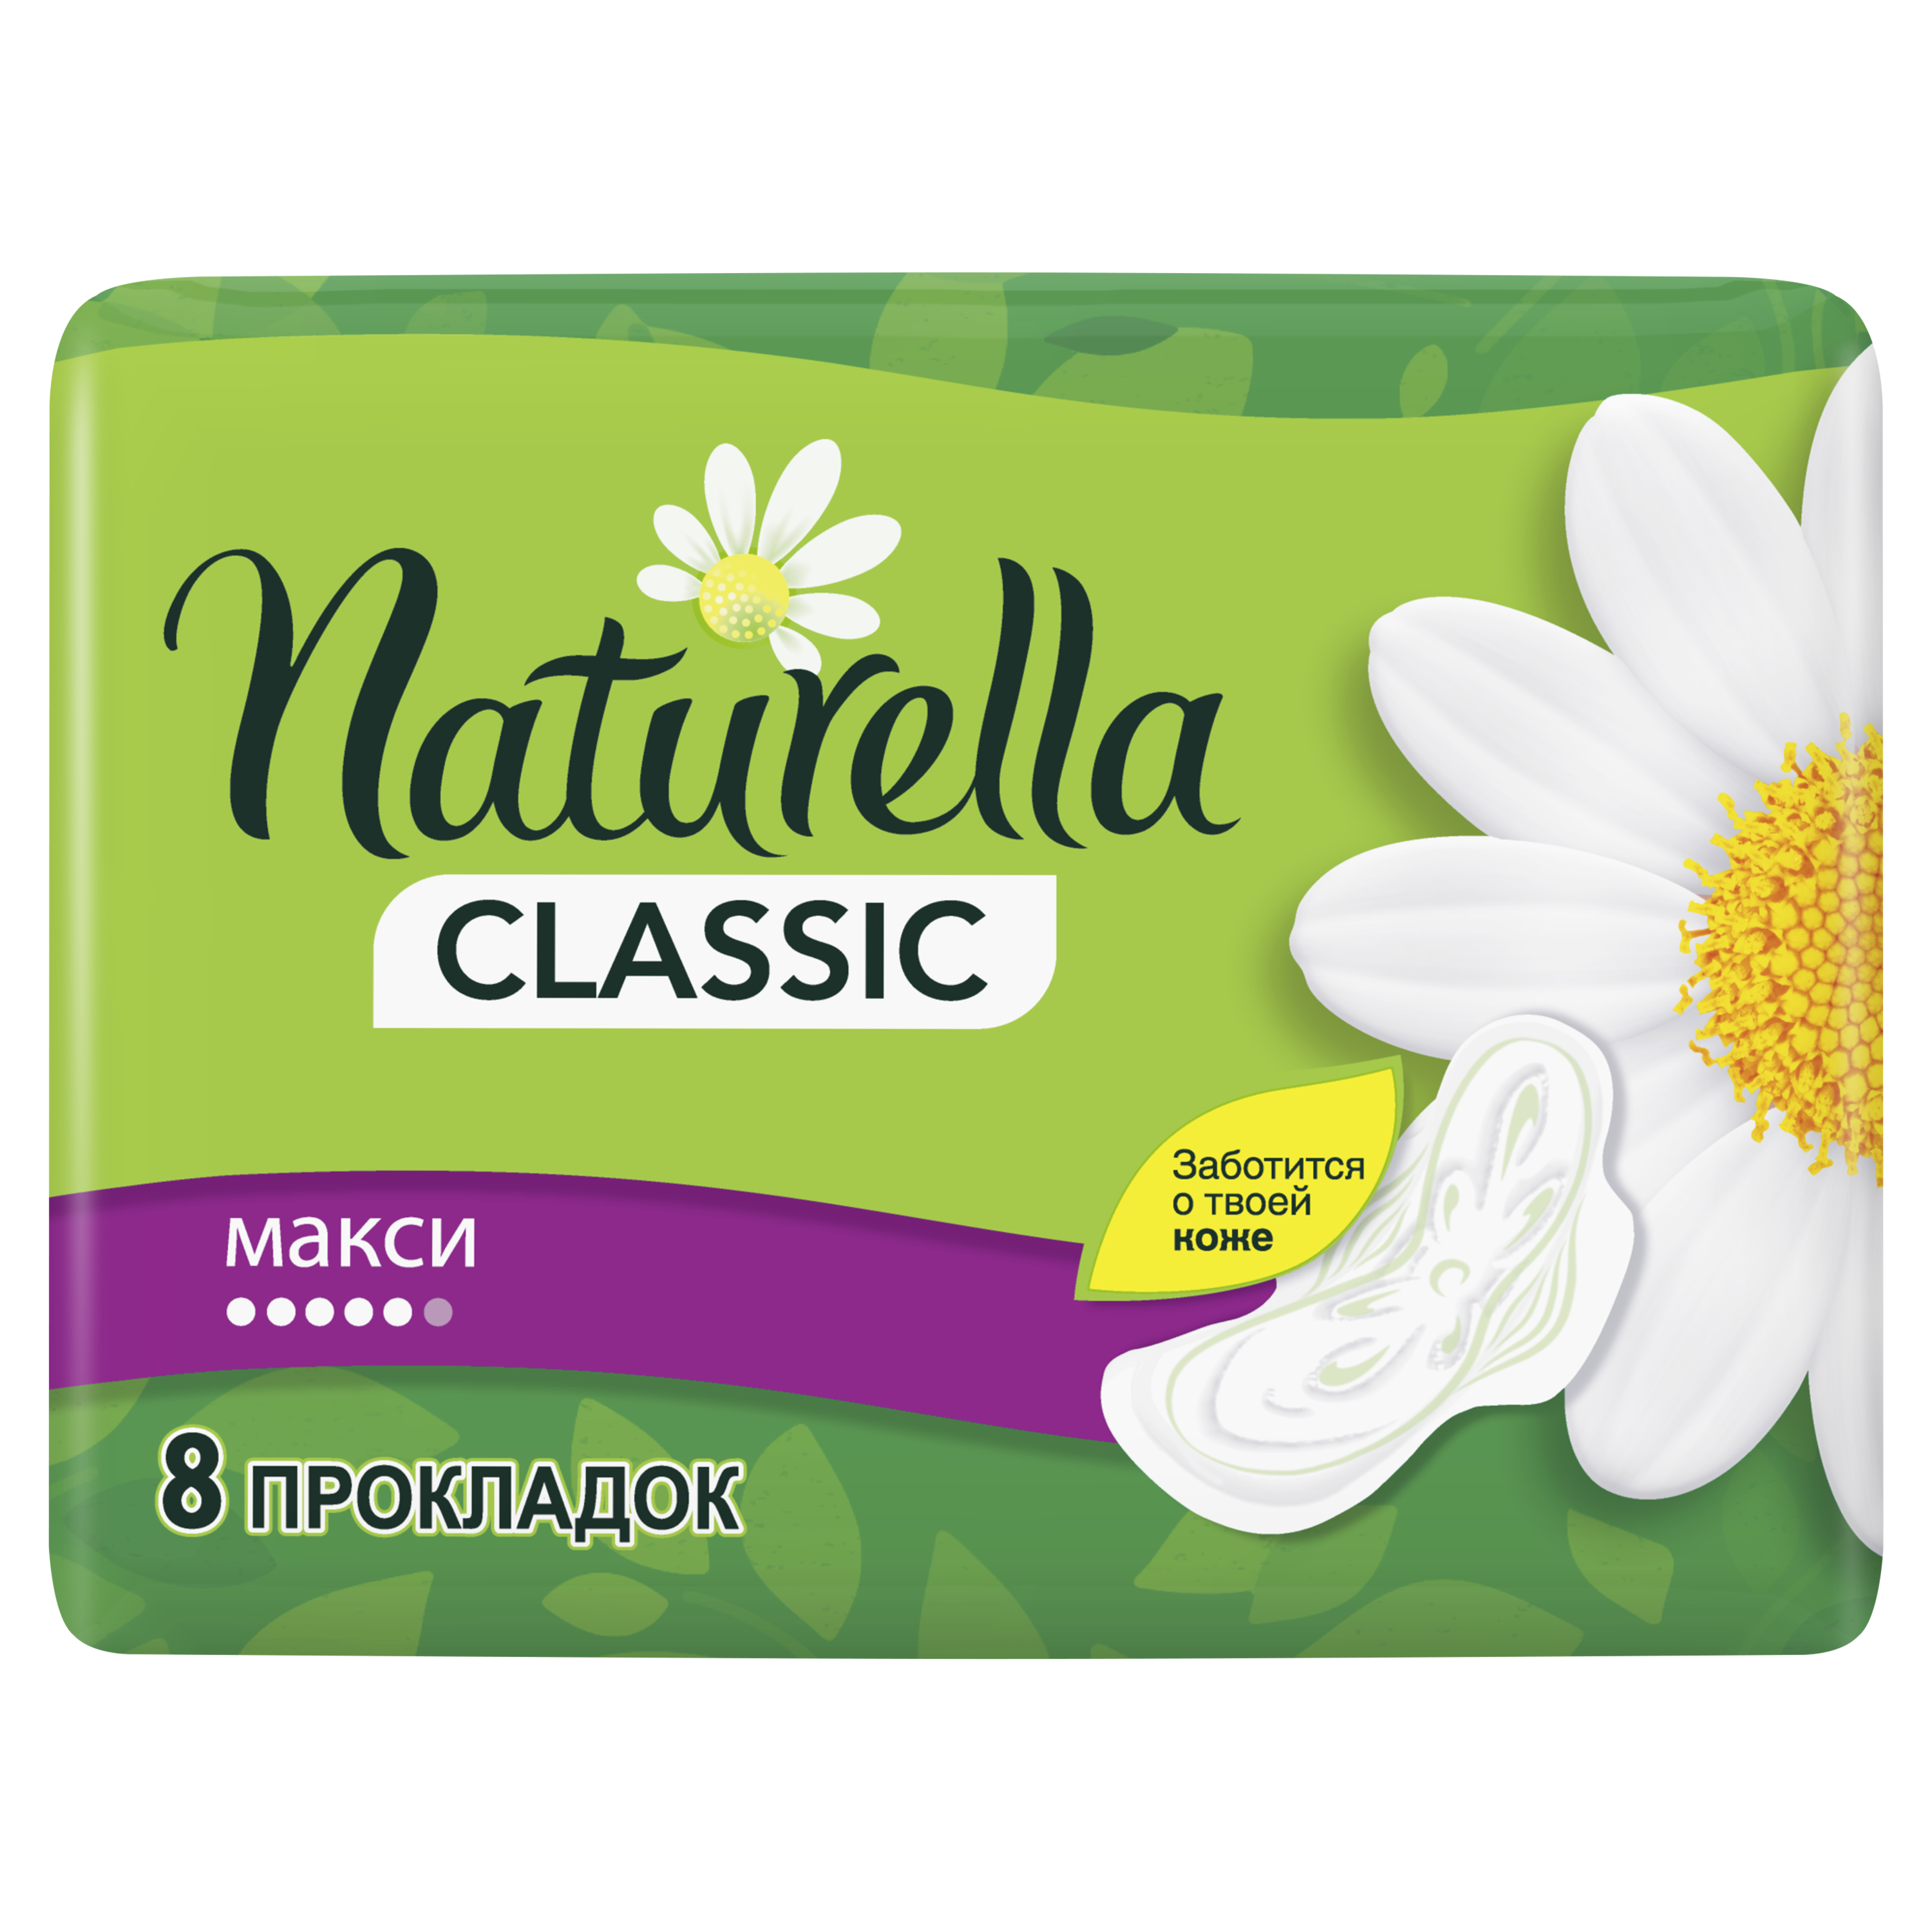 Прокладки Naturella Classic Camomile Maxi Single 8шт прокладки женские bella flora camomile 10 шт с экстрактом ромашки be 012 rw10 099